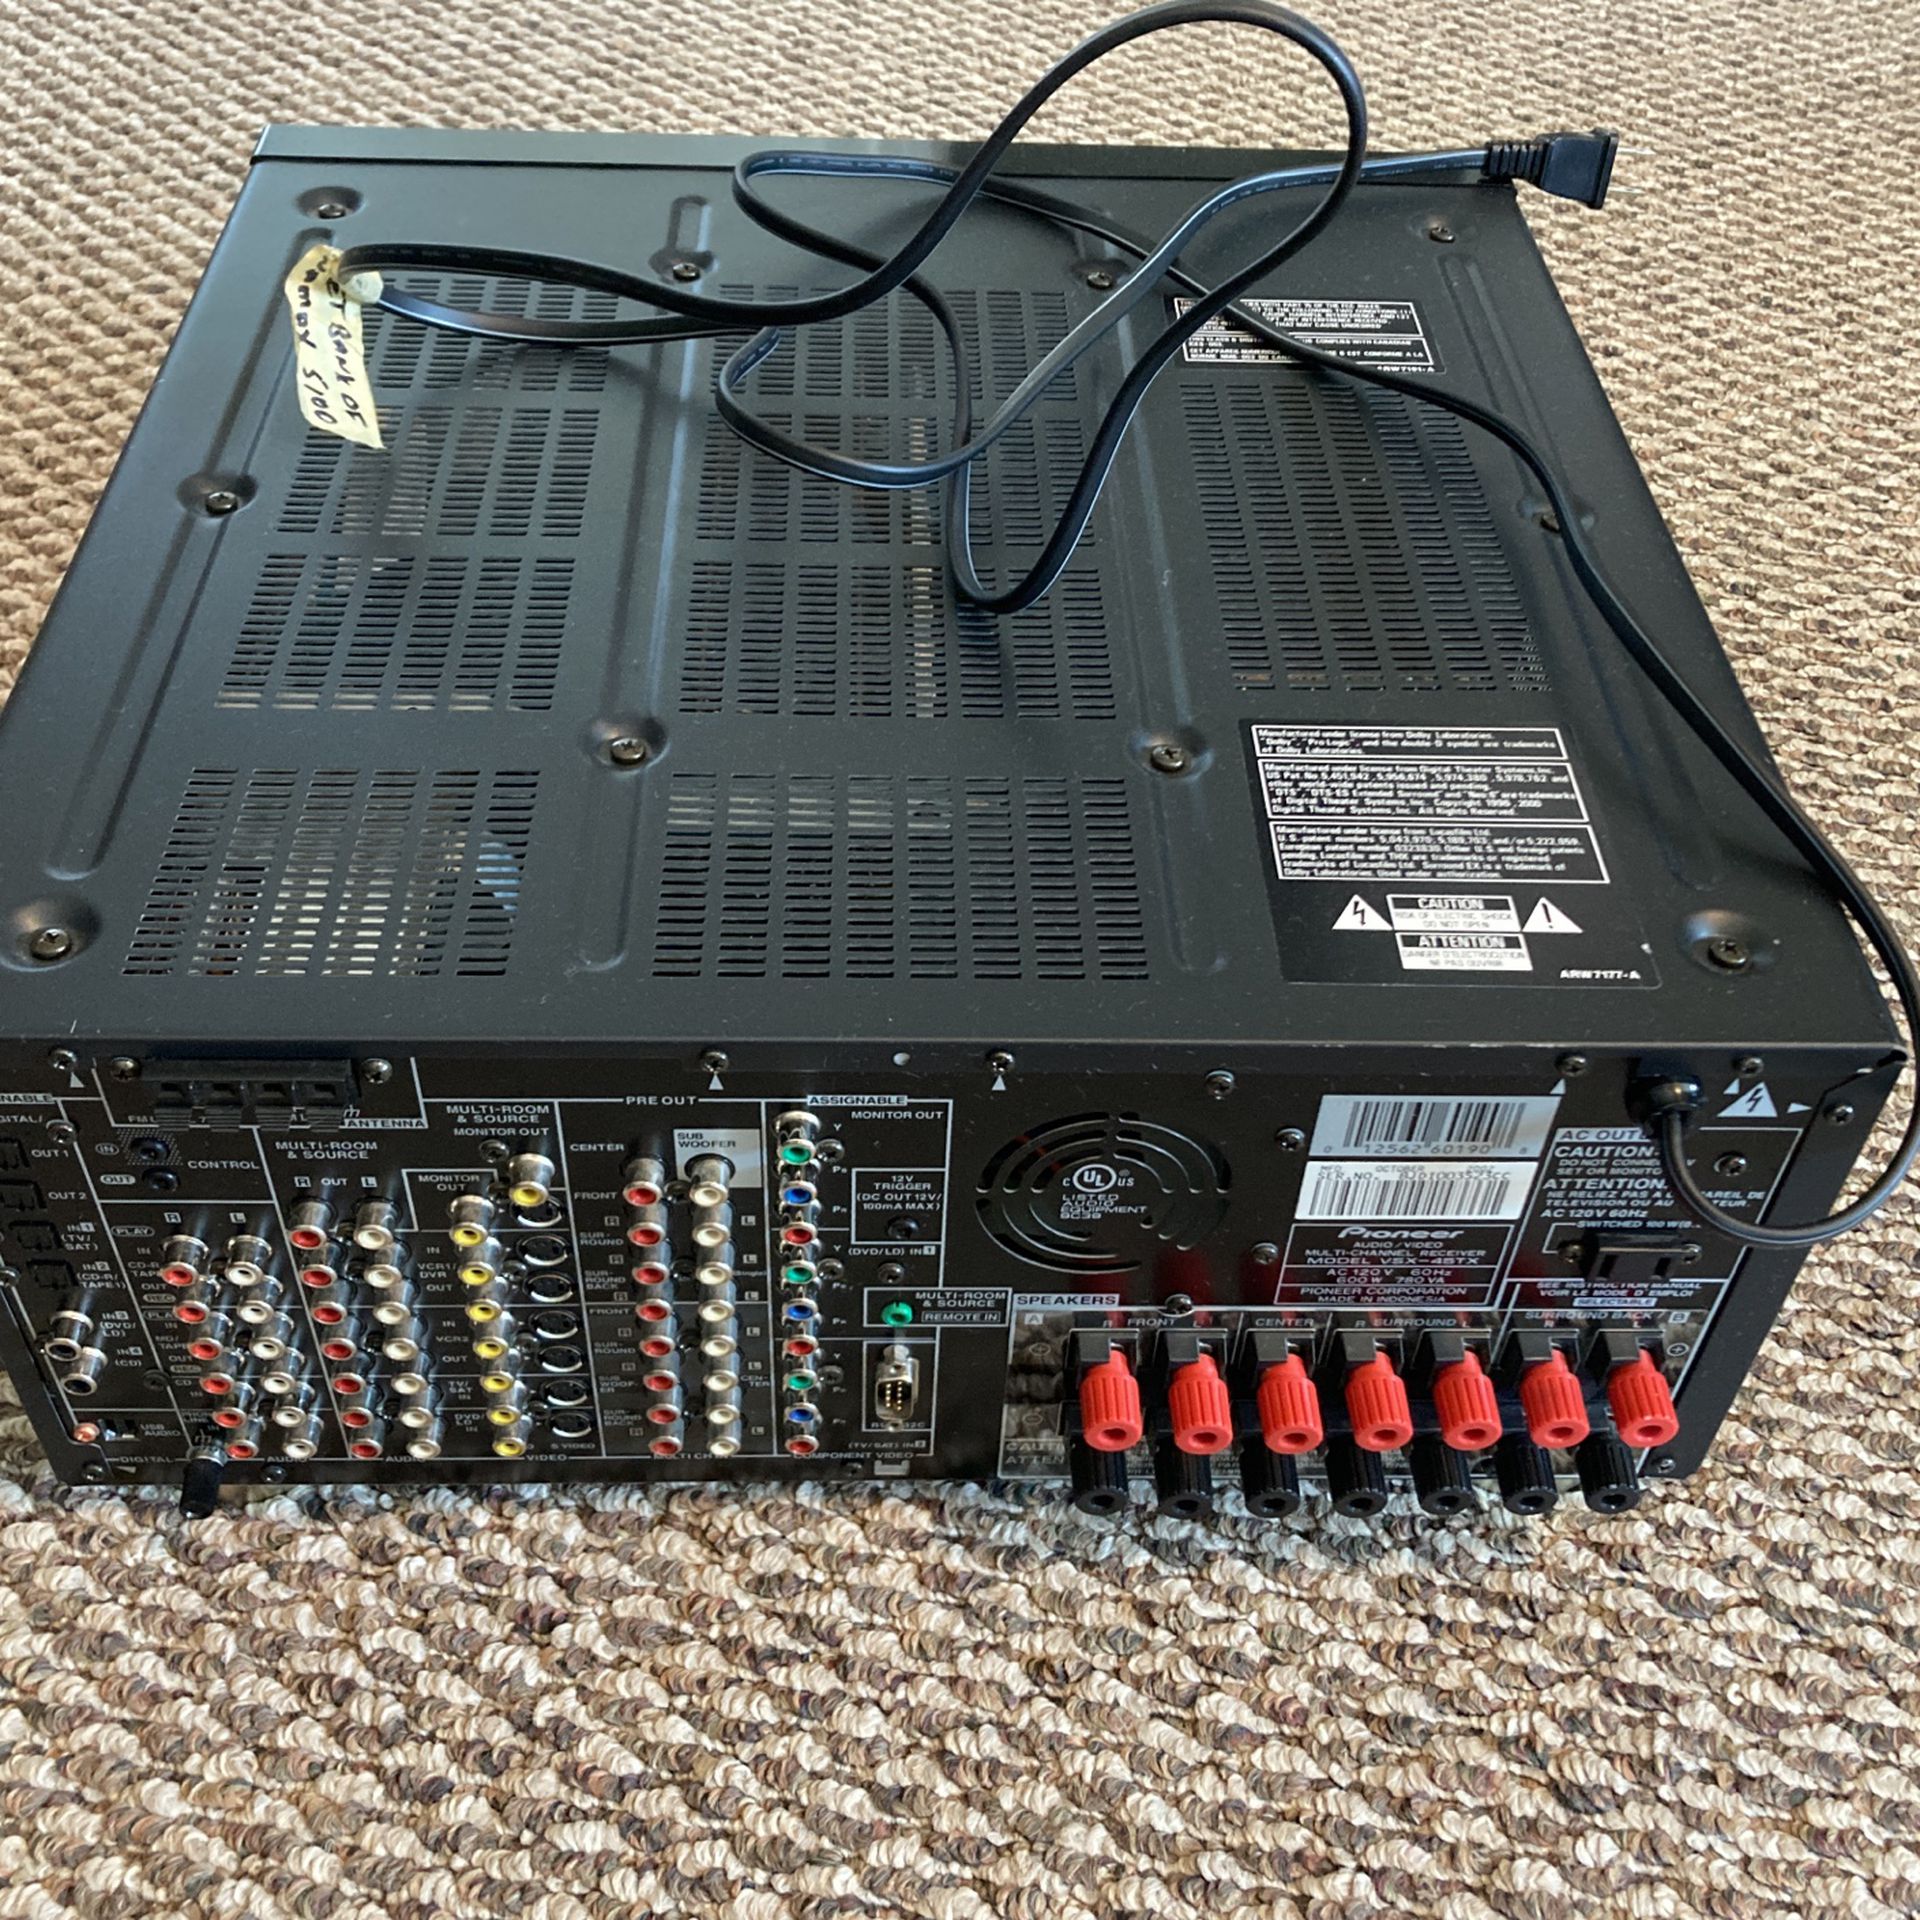 Pioneer VSX-45TX Elite Audio Video Receiver